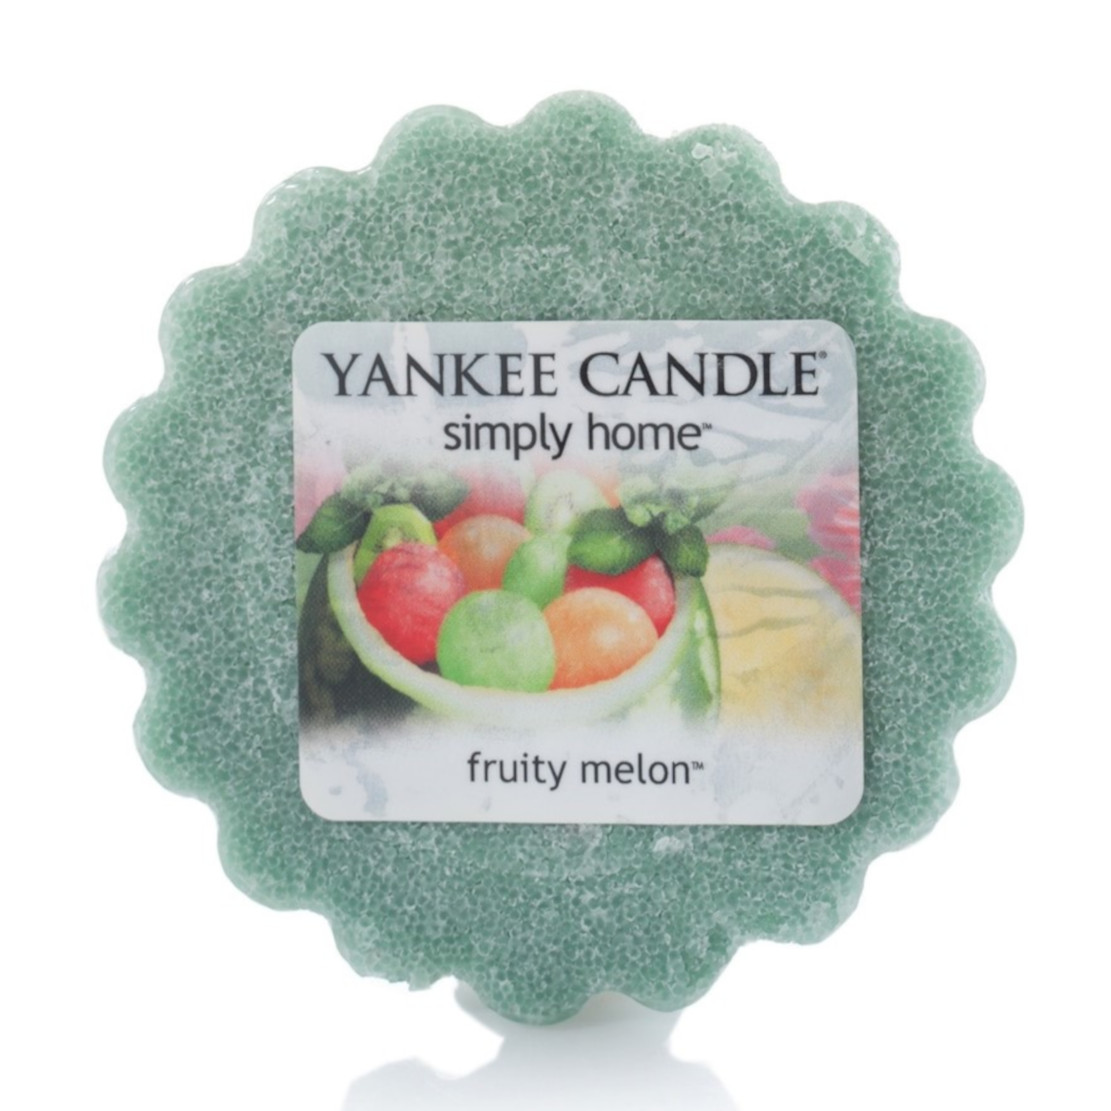 Yankee Candle Fruity Melon Wax Melt Tart